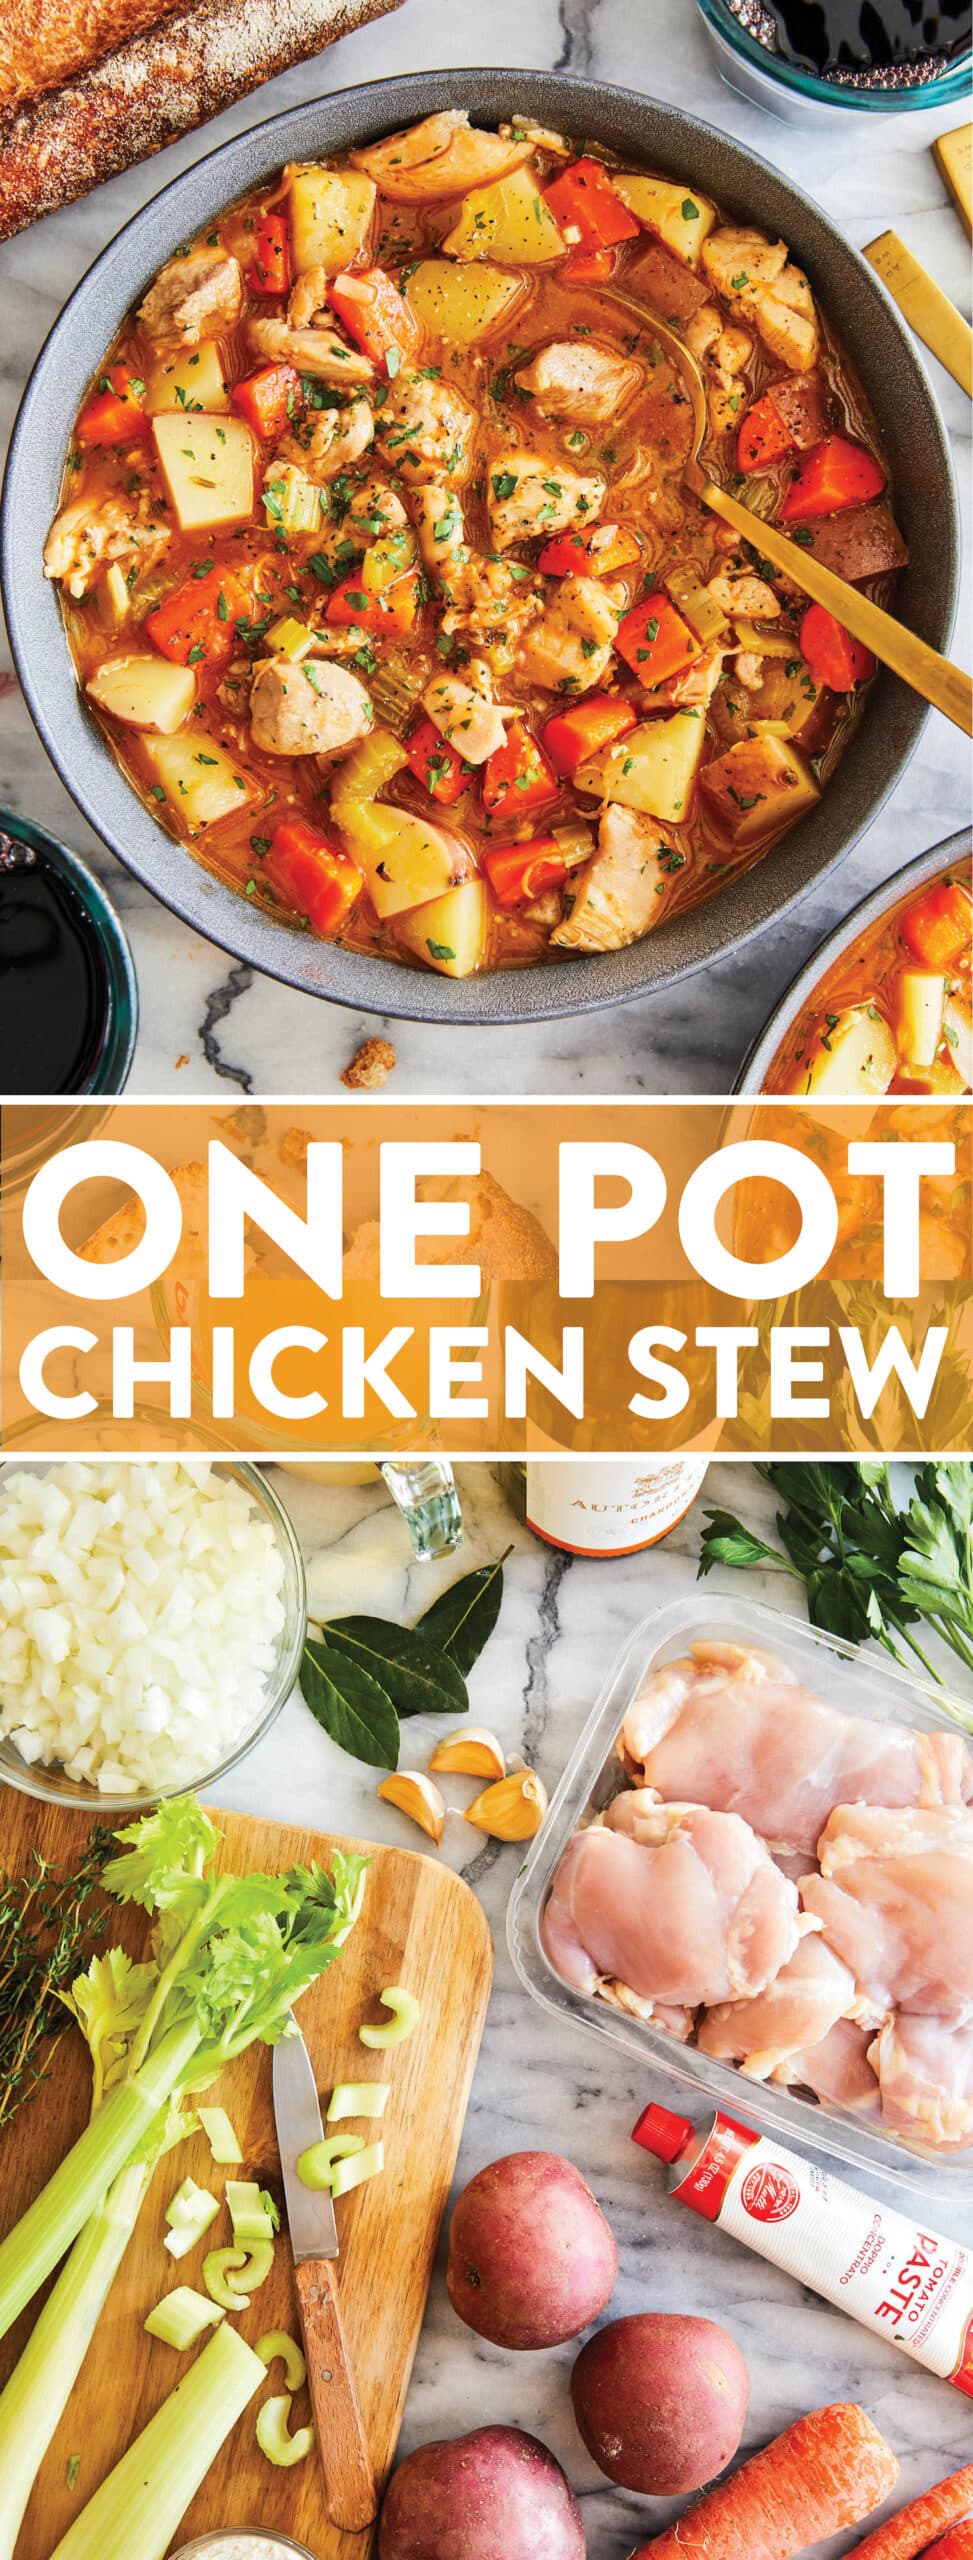 One Pot Chicken Stew | LaptrinhX / News